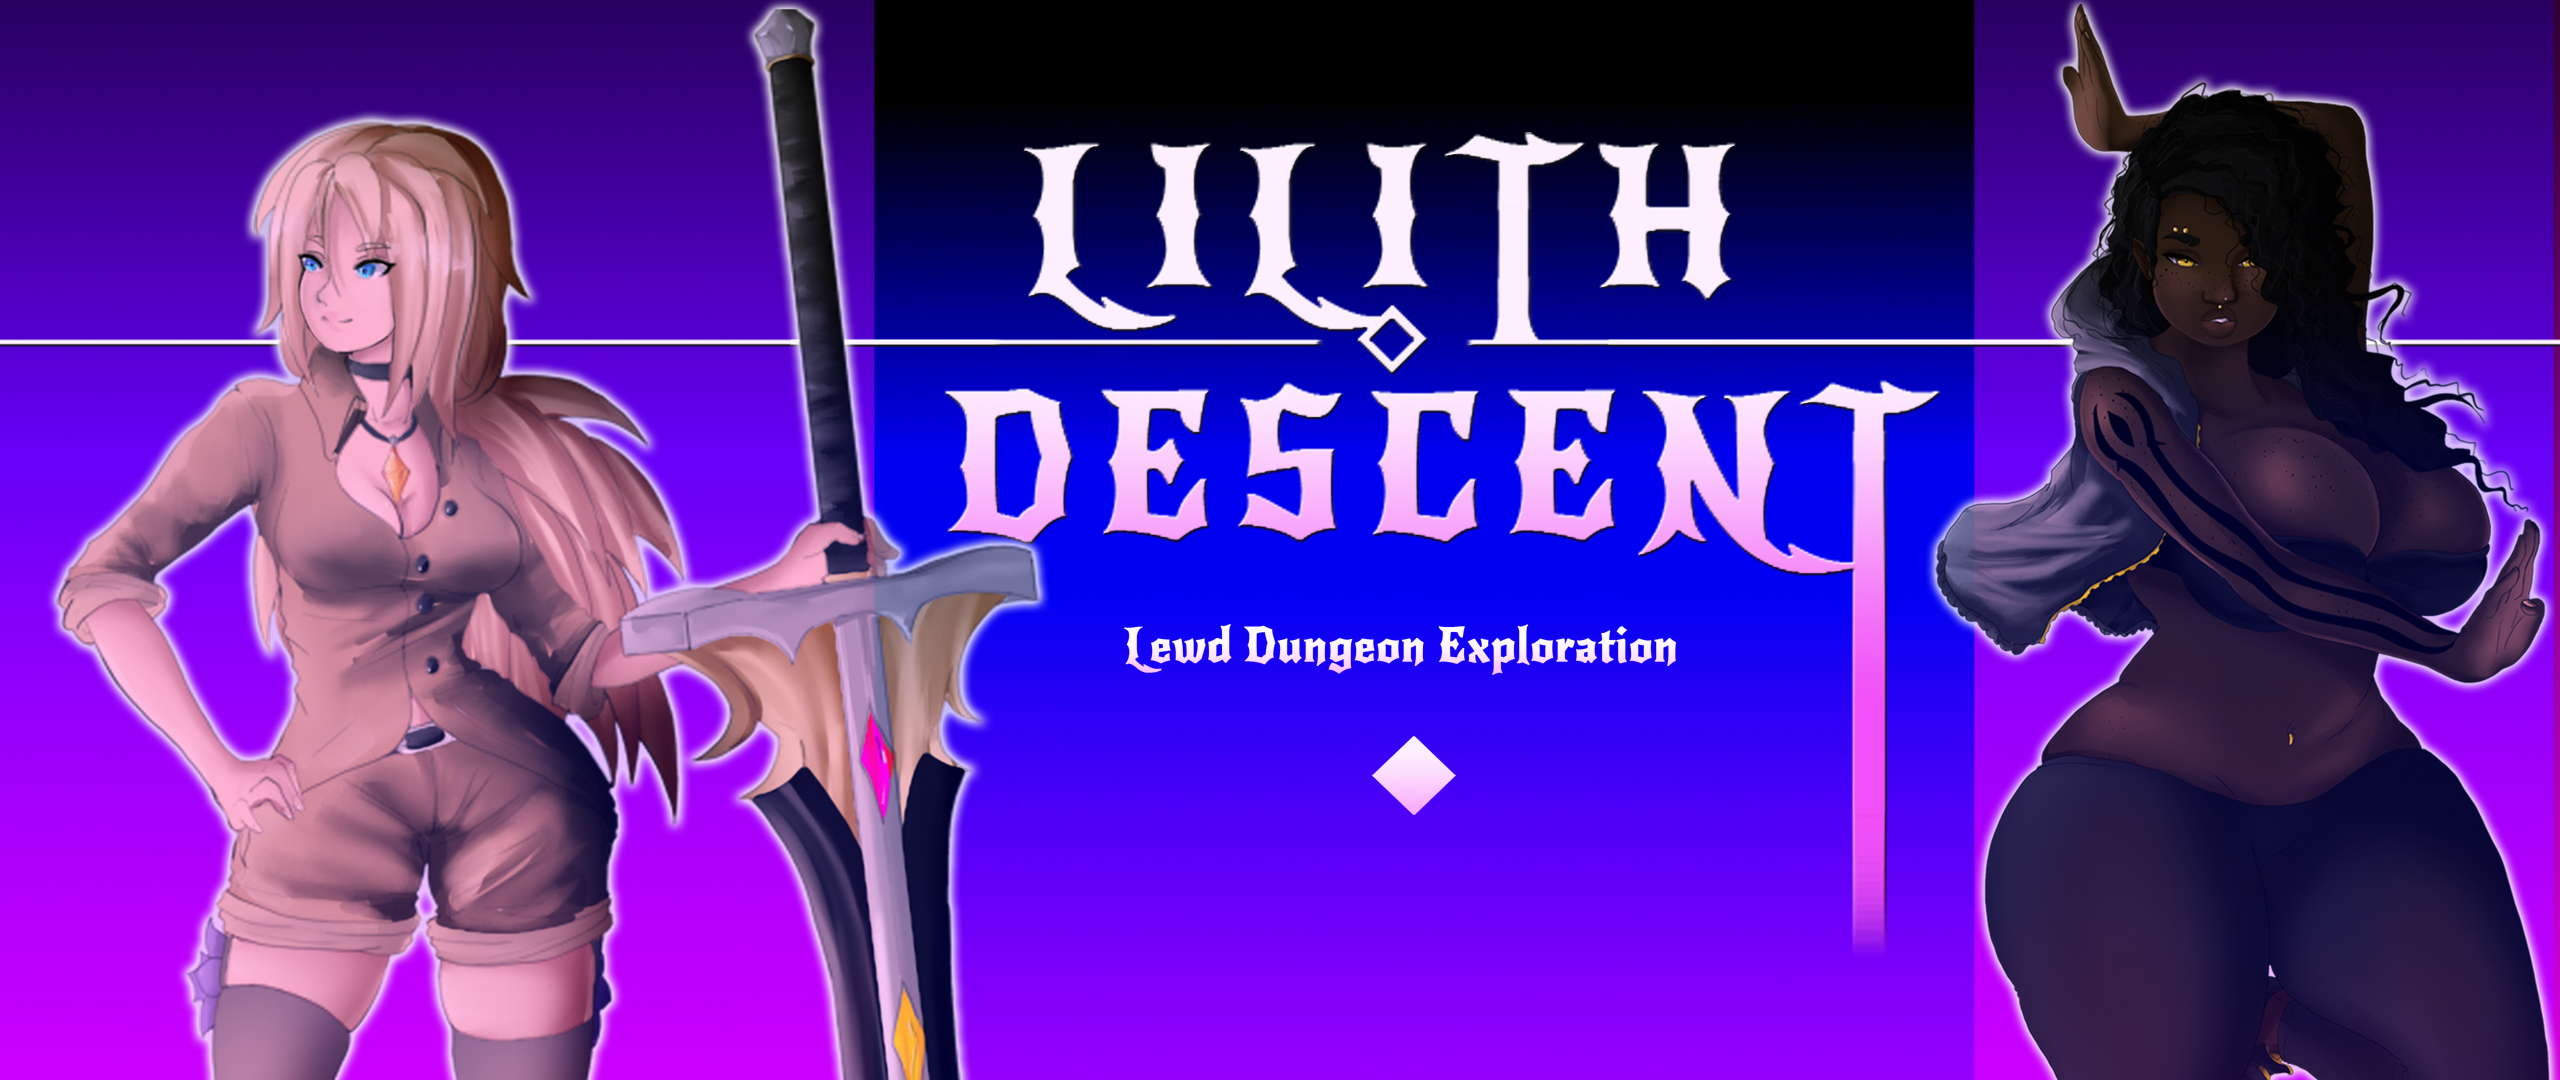 Lilith Descent